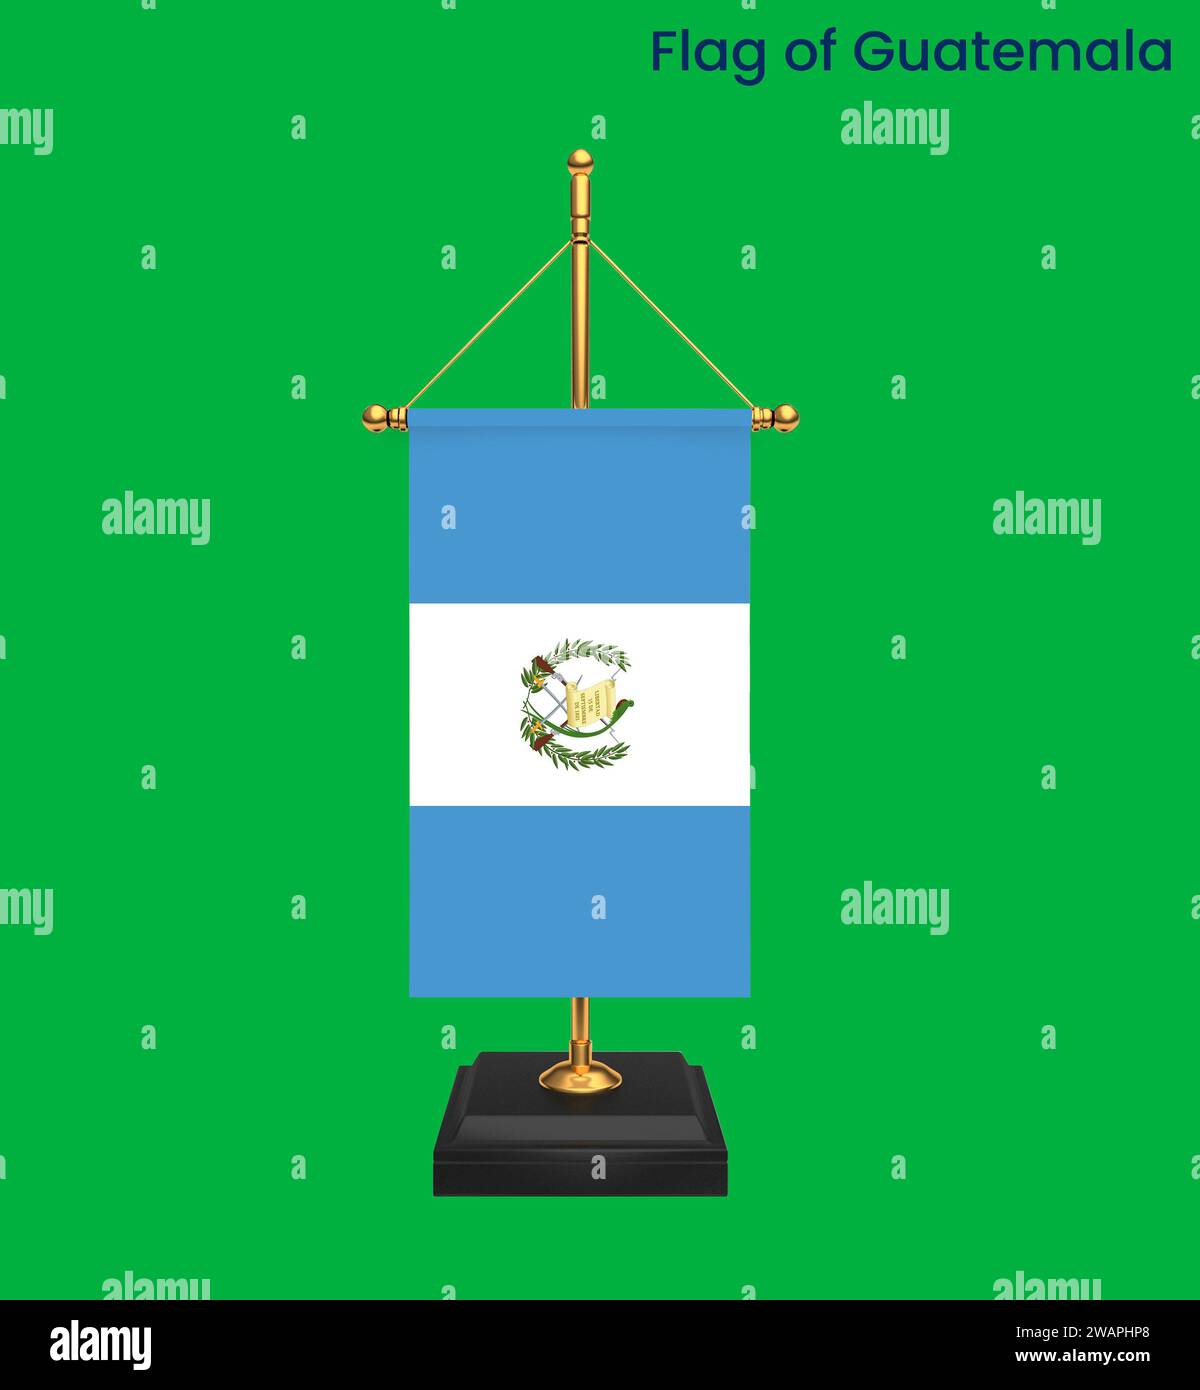 Hohe detaillierte Flagge von Guatemala. Nationalflagge Guatemalas. Nordamerika. 3D-Abbildung. Stockfoto